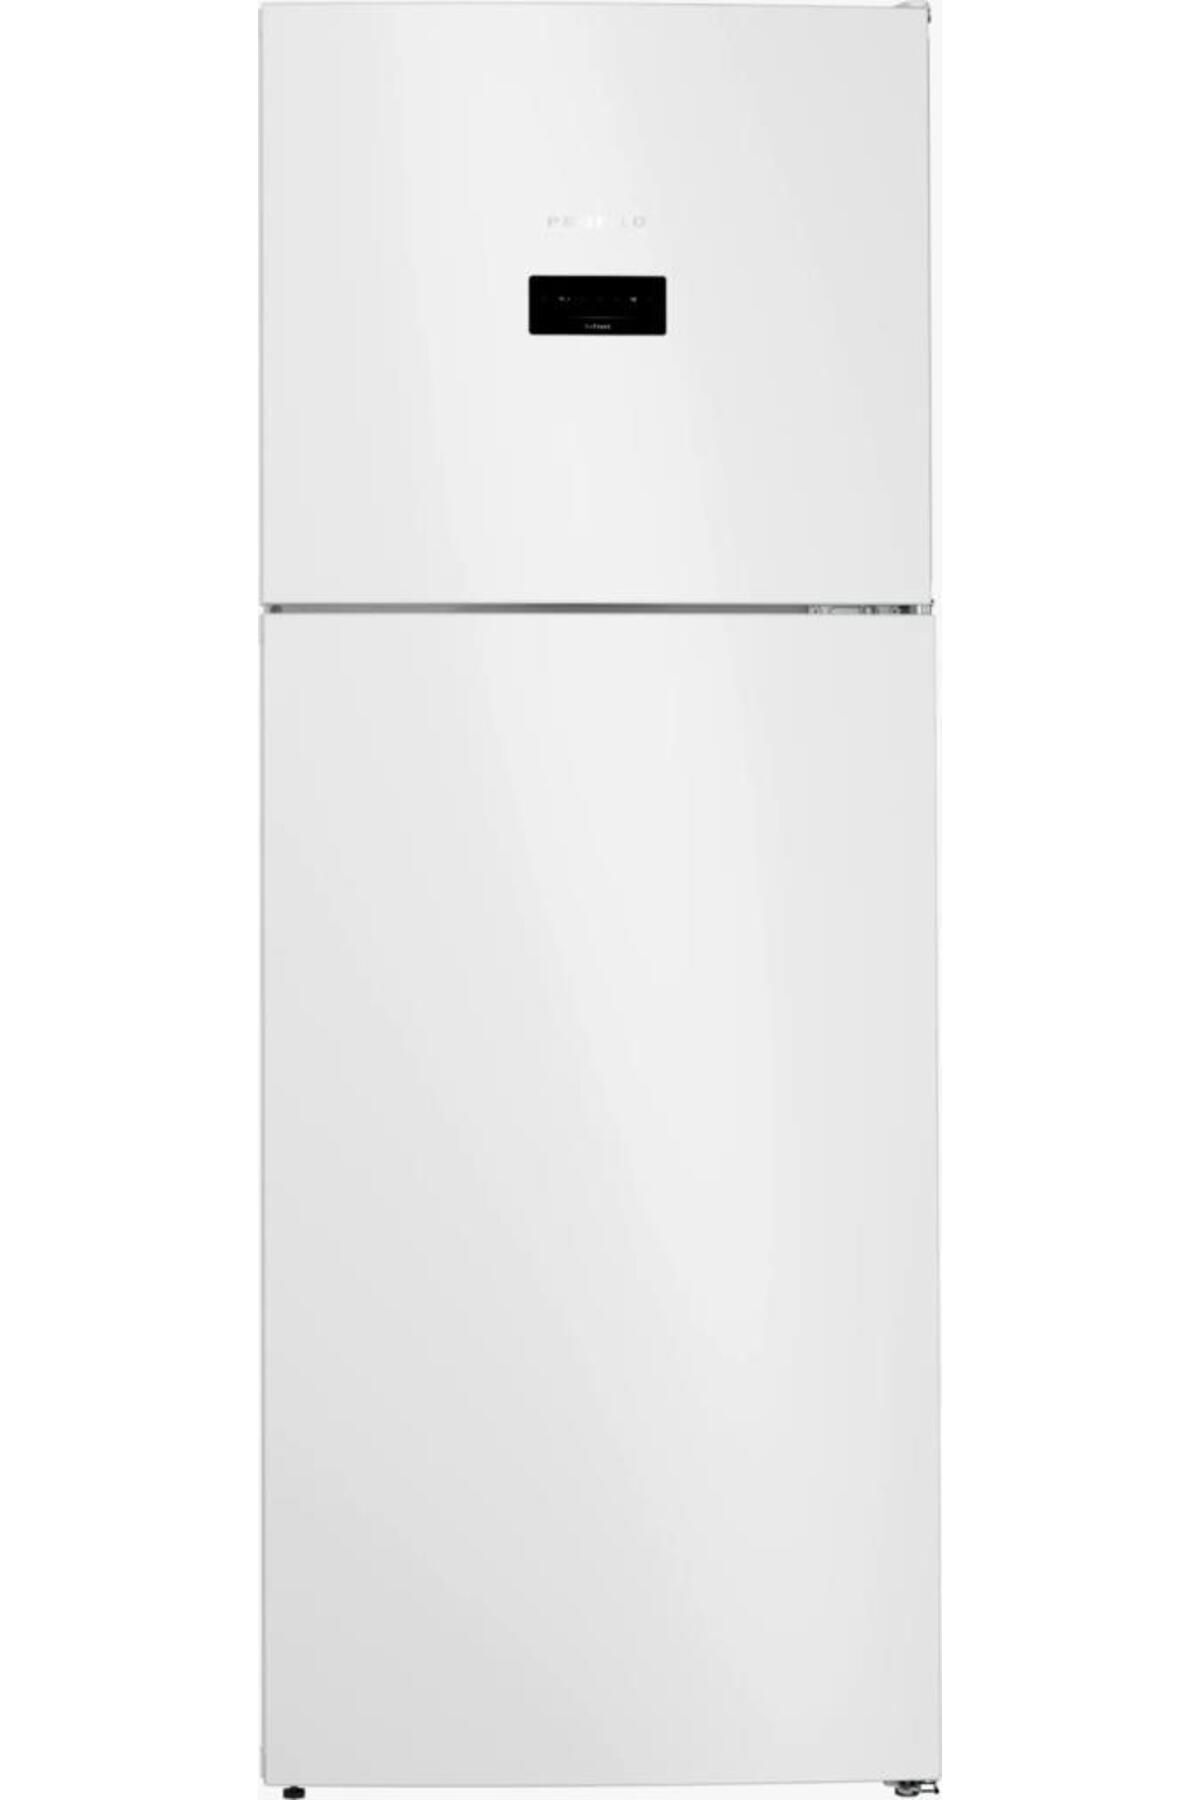 Profilo Bd2055wexn Buzdolabı-no Frost-485 Lt